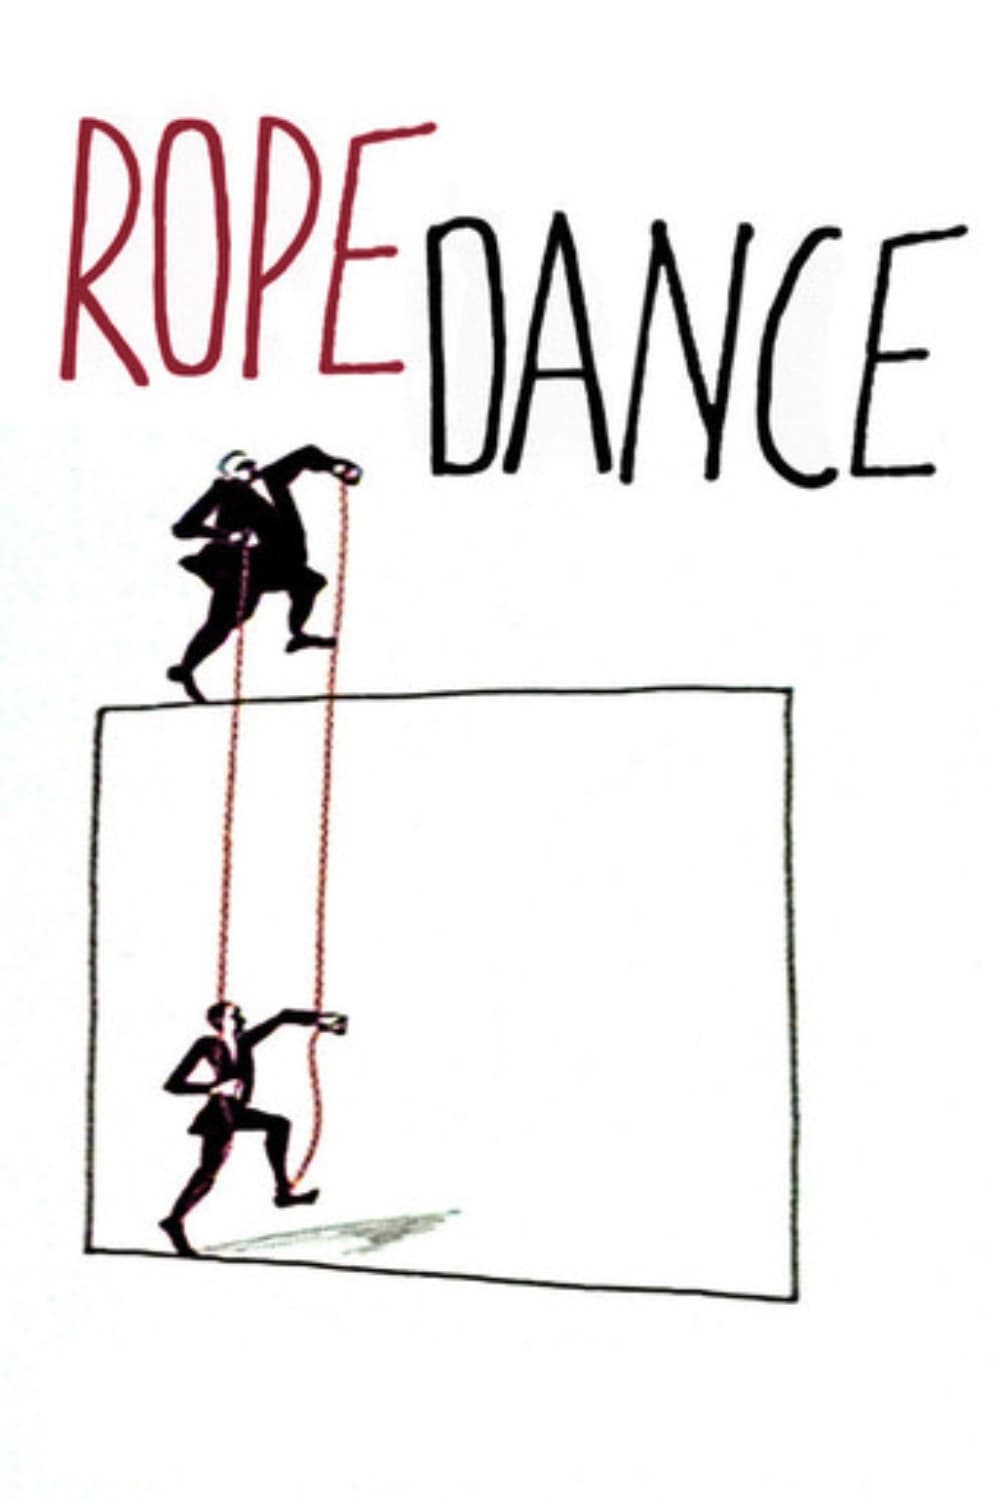 Rope Dance